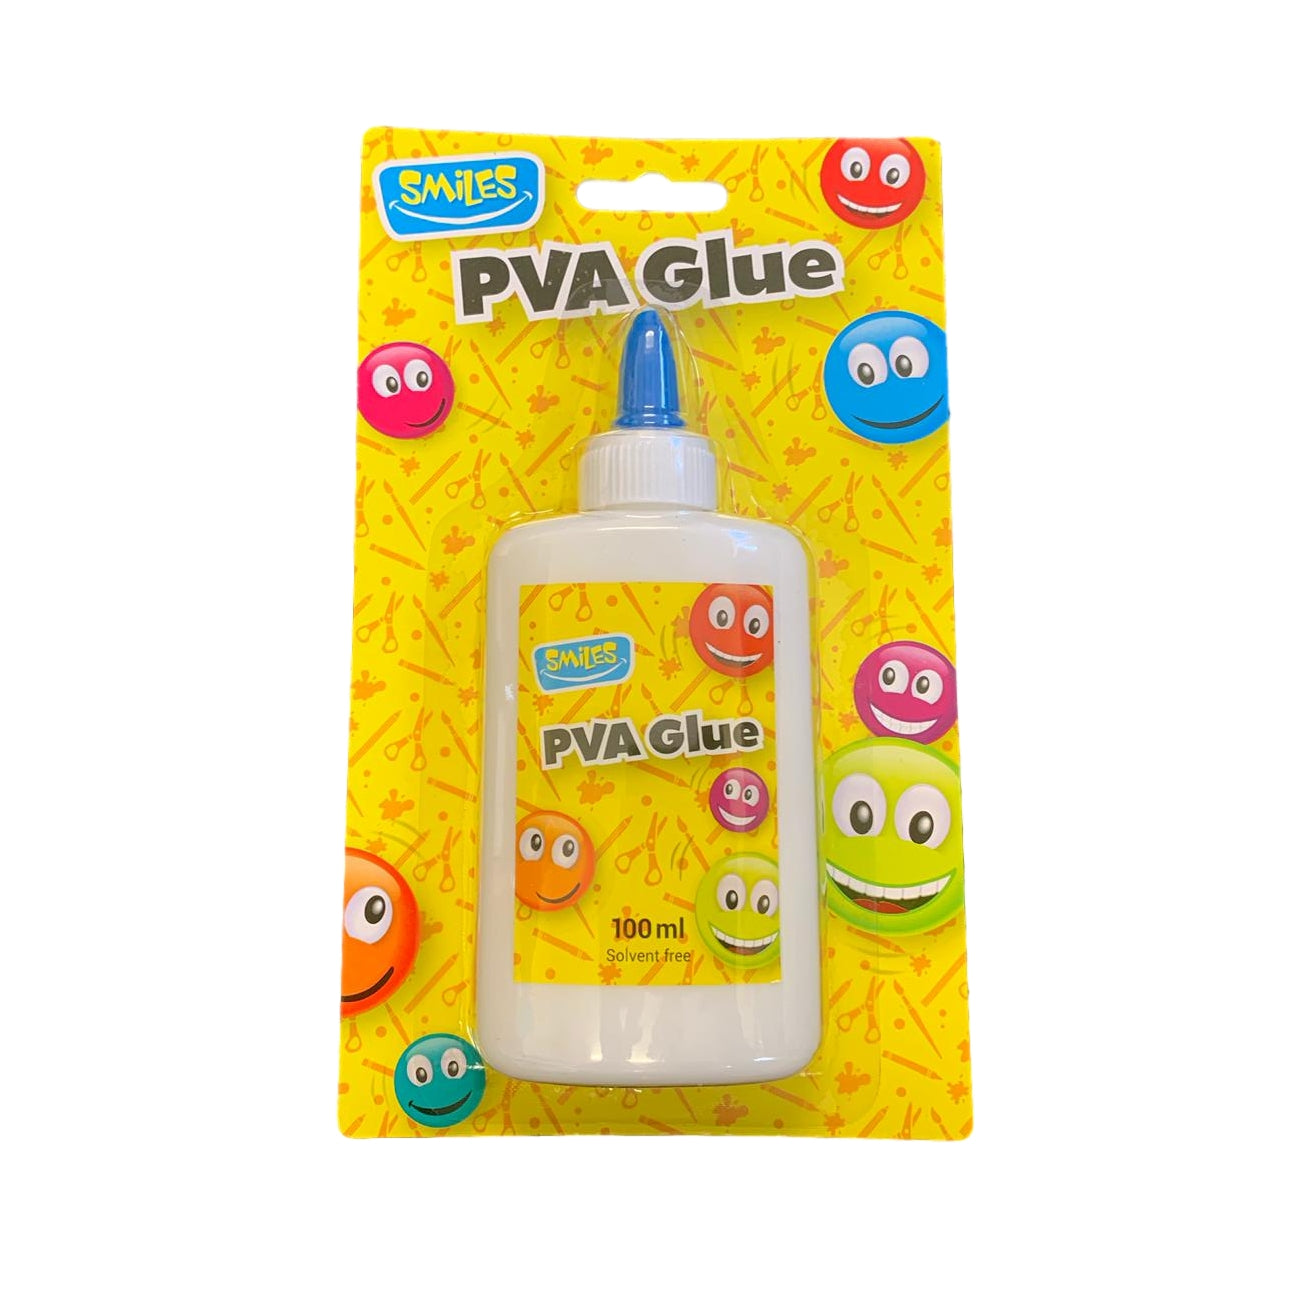 Smiles PVA Glue 100ml Solvent Free